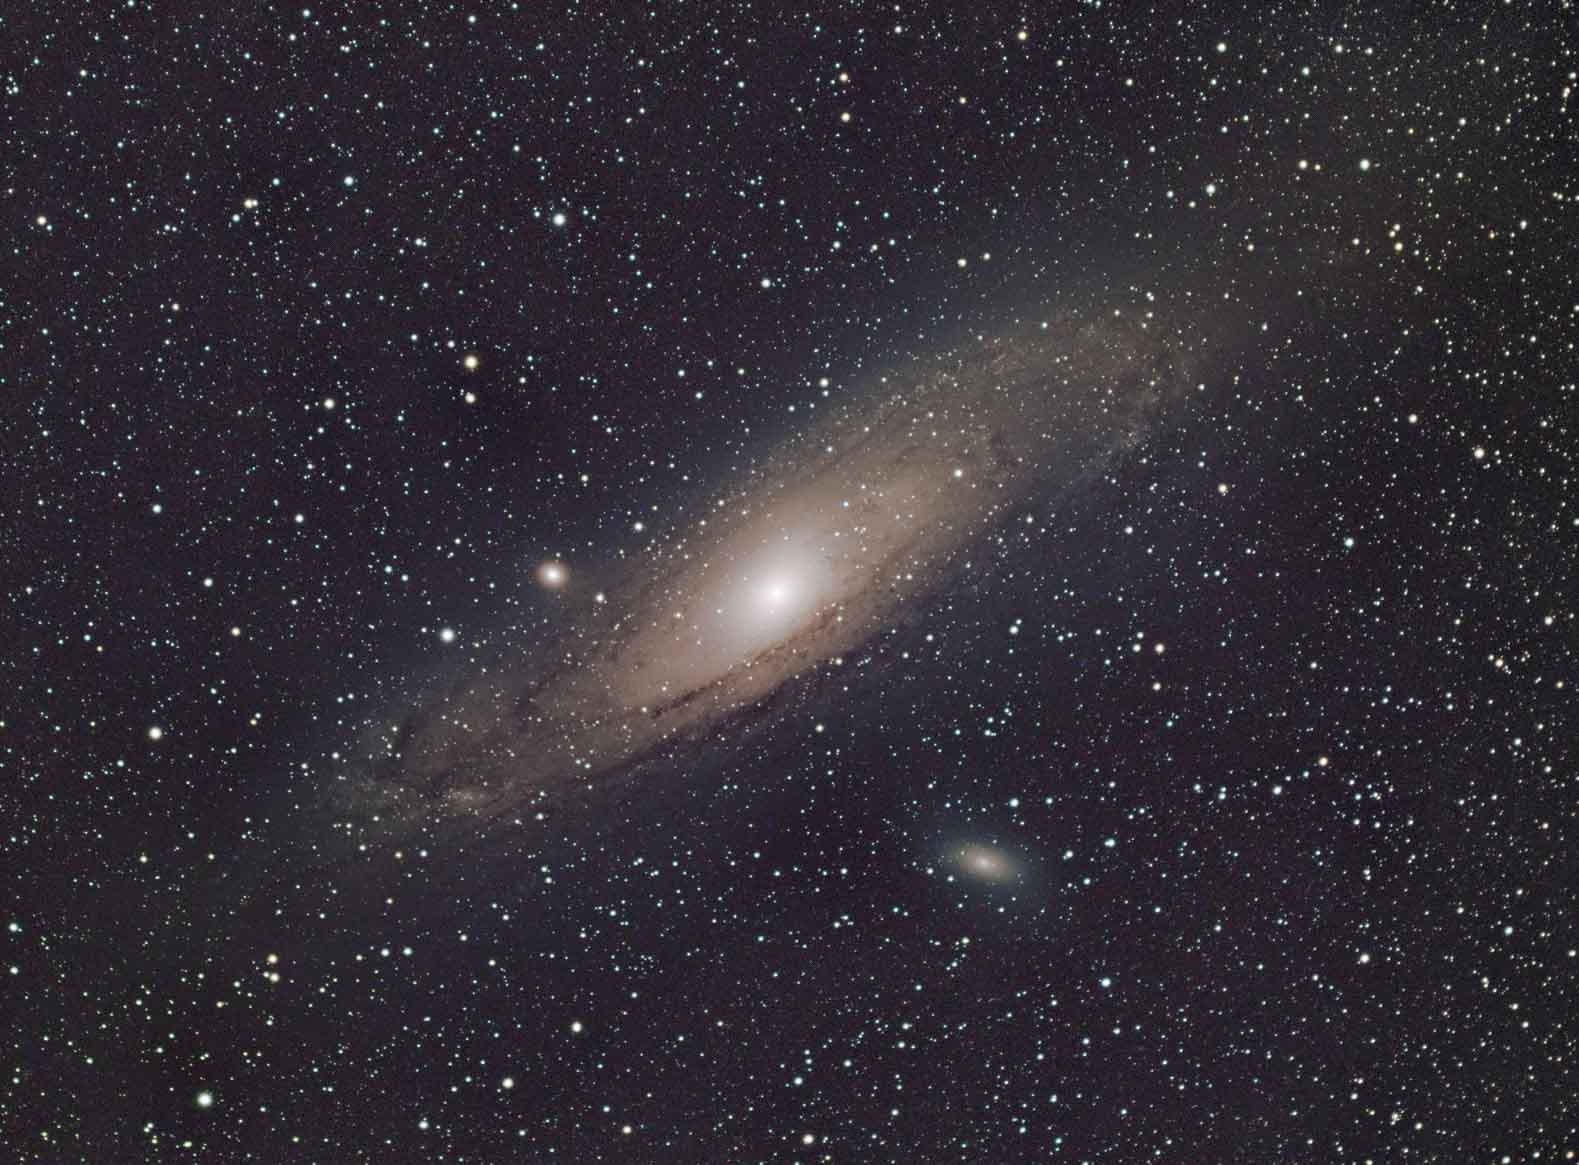 20200222-20200223 Messier 31, or Andromeda Galaxy